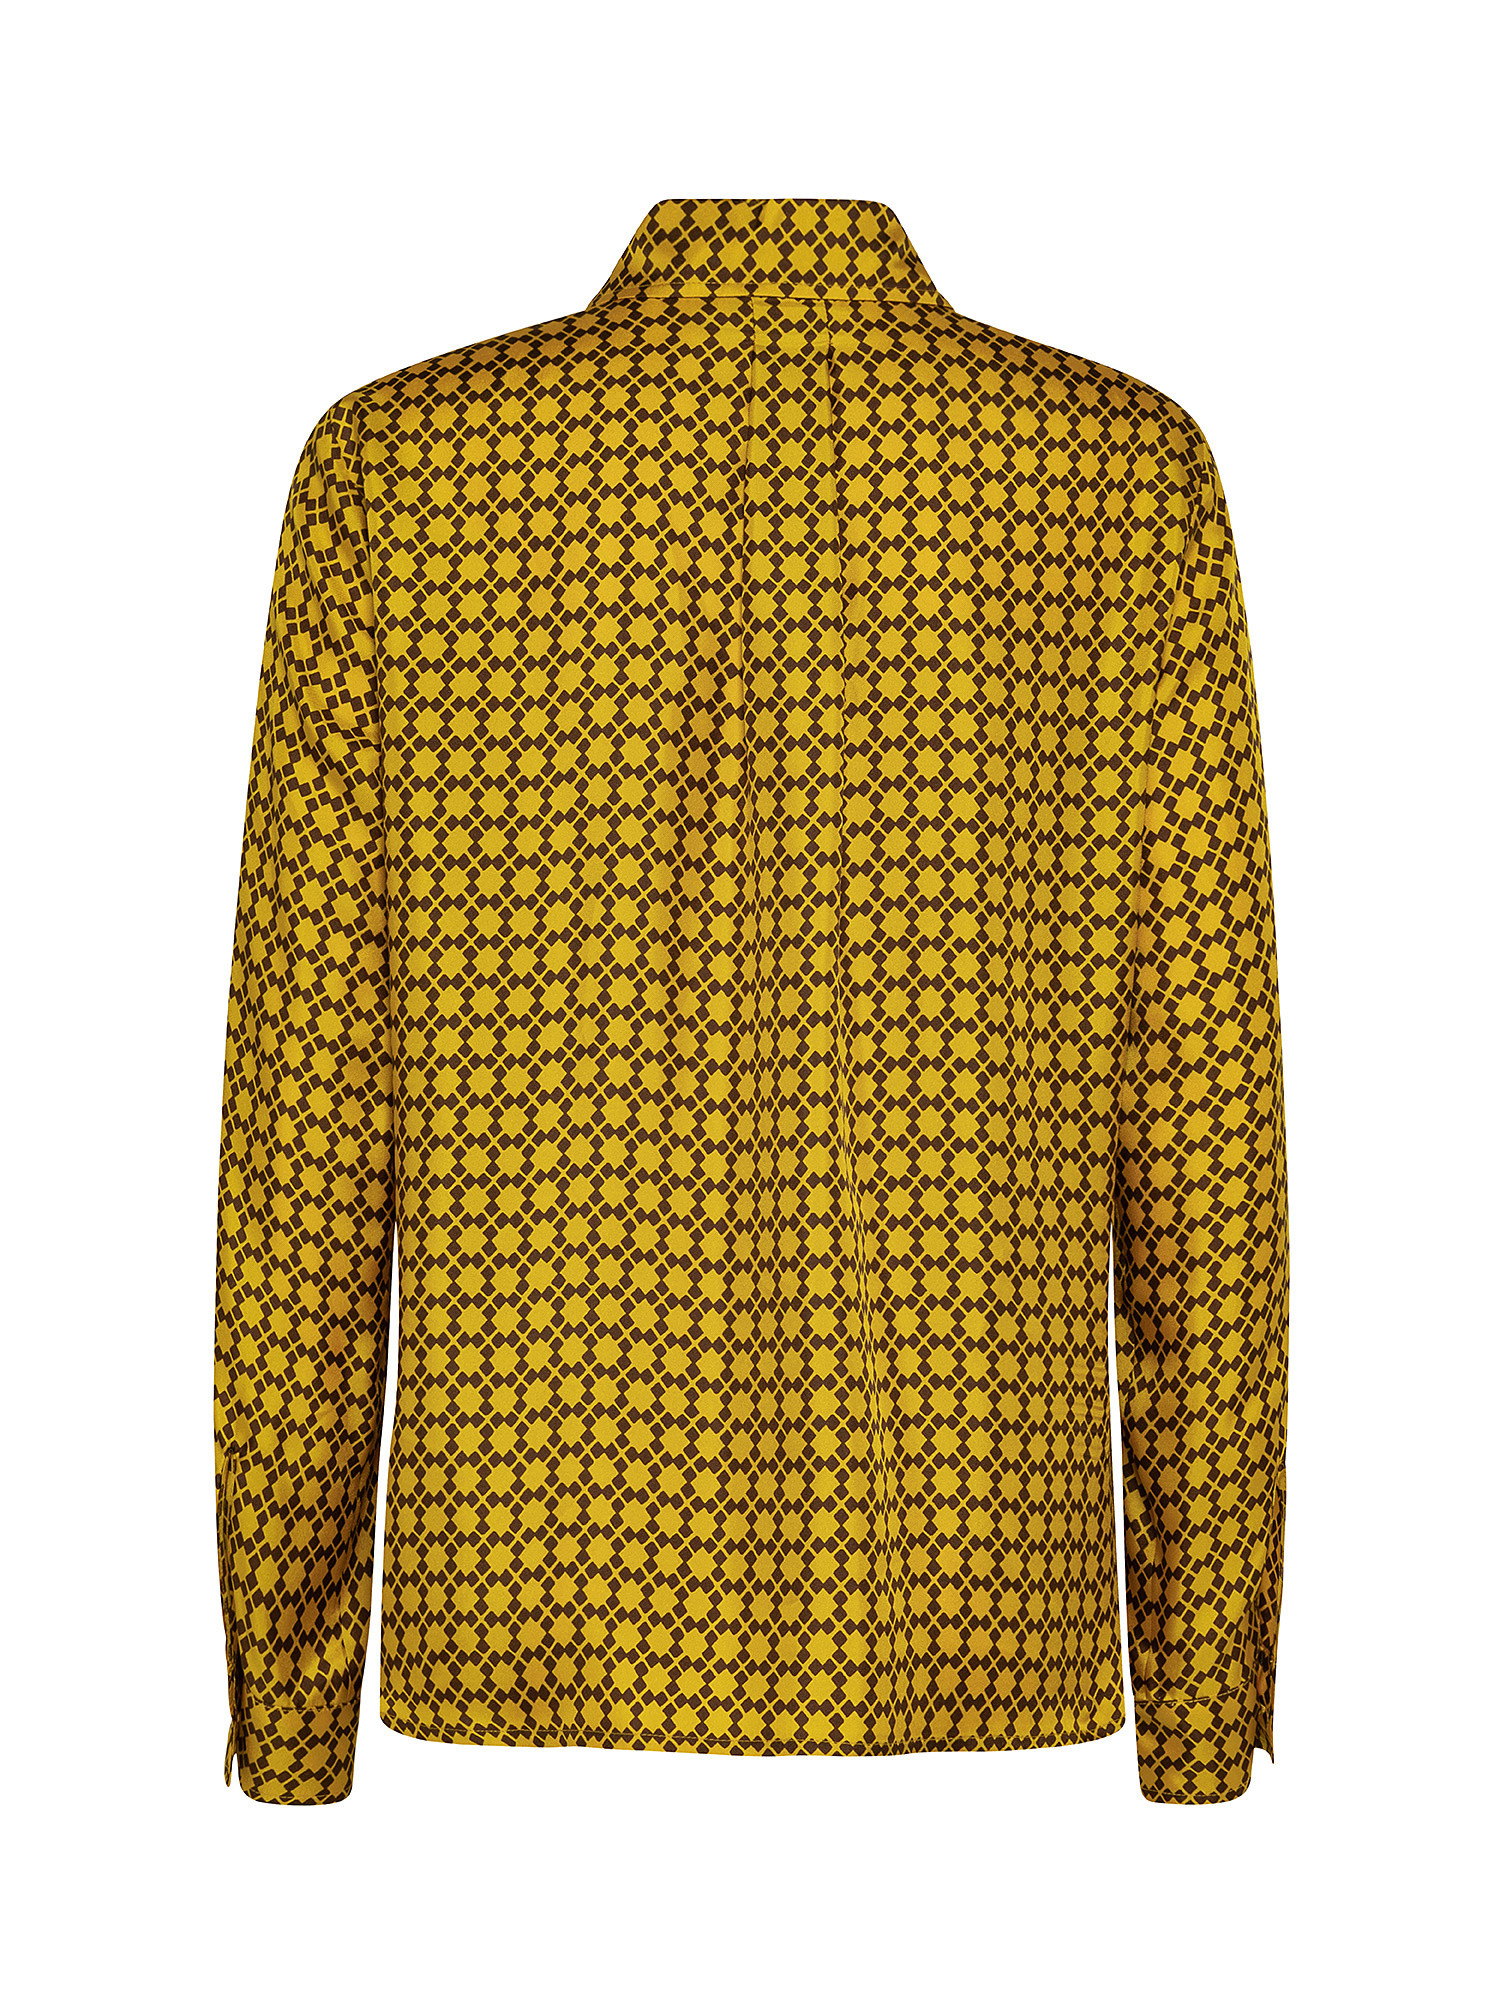 Camicia con stampa in twill di seta, Yellow, large image number 1